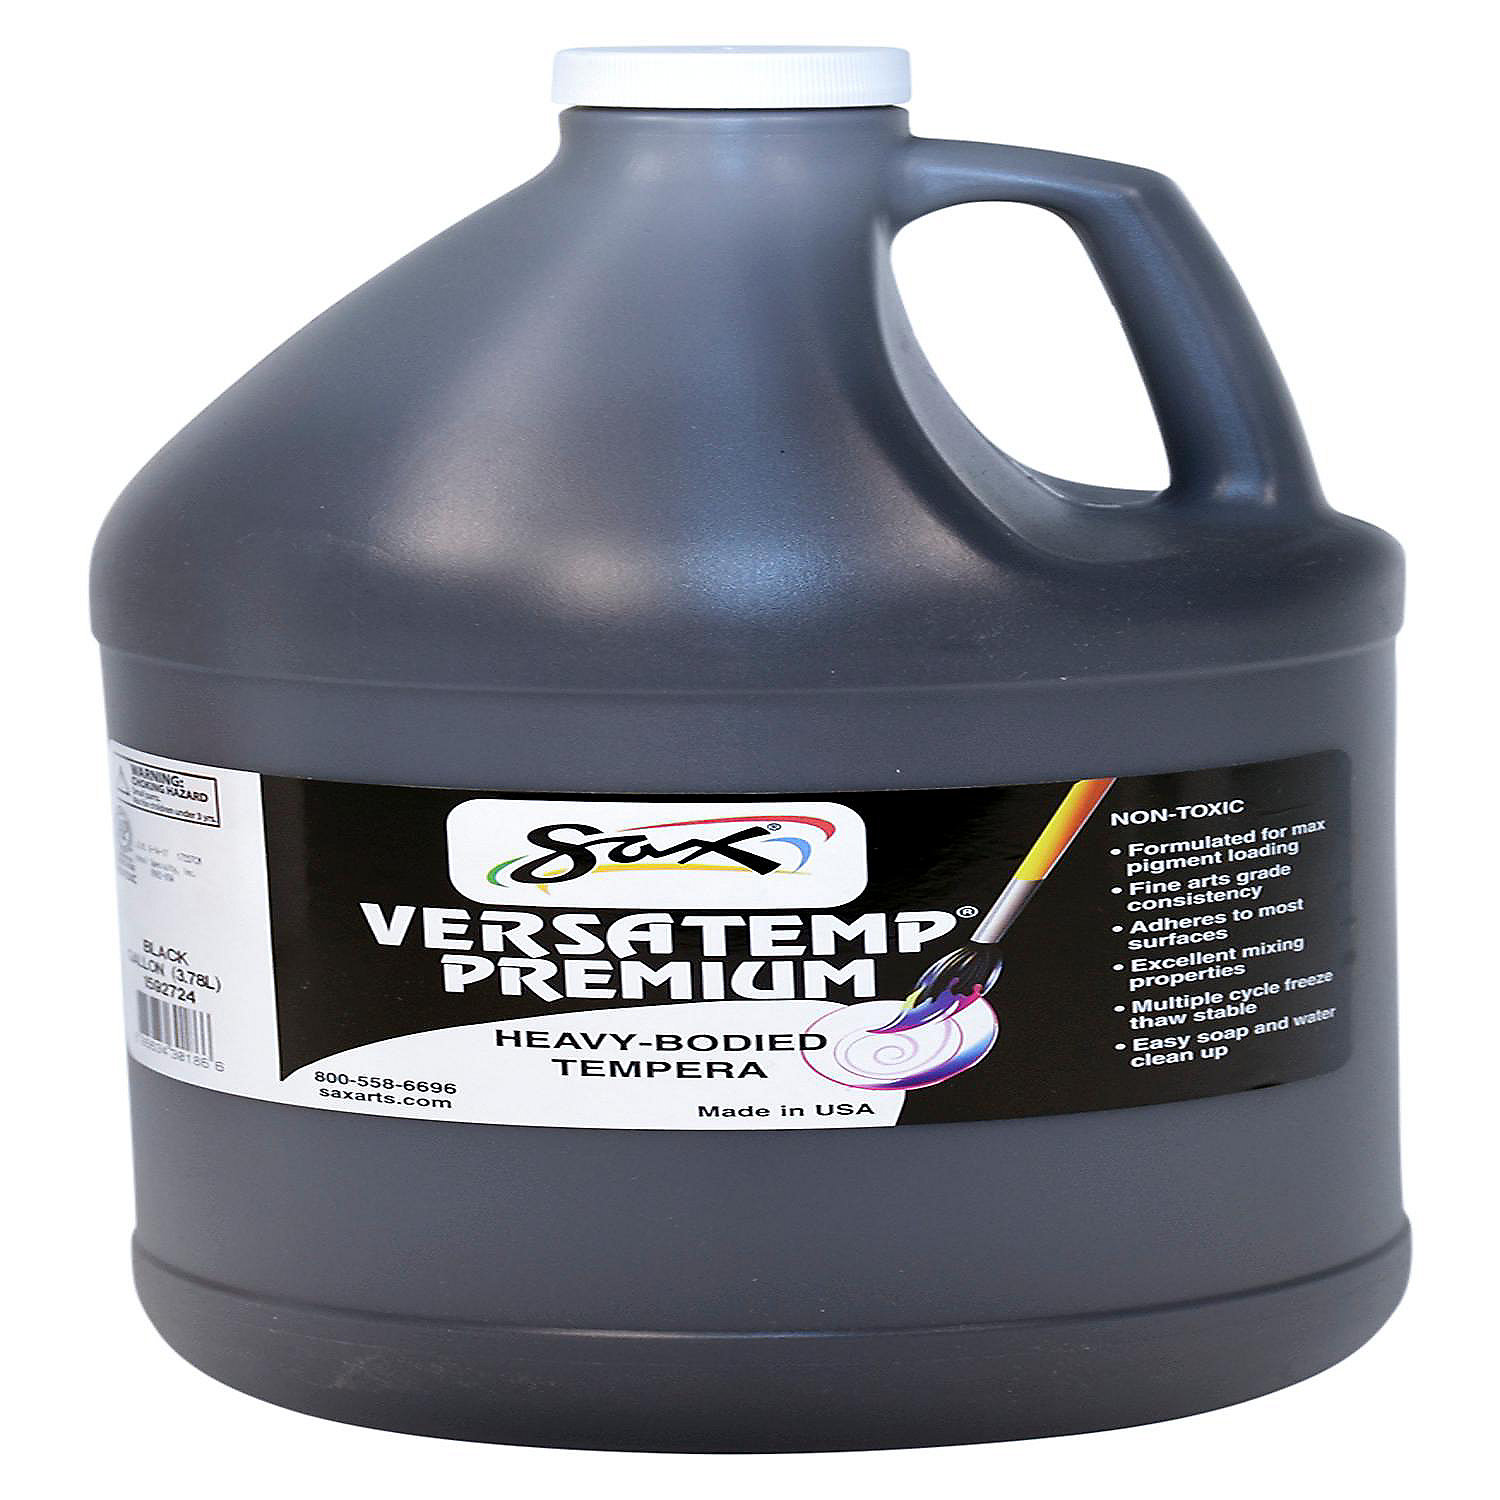 Sax Versatemp Premium Heavy-Bodied Tempera Paint, 1 Gallon, Black ...